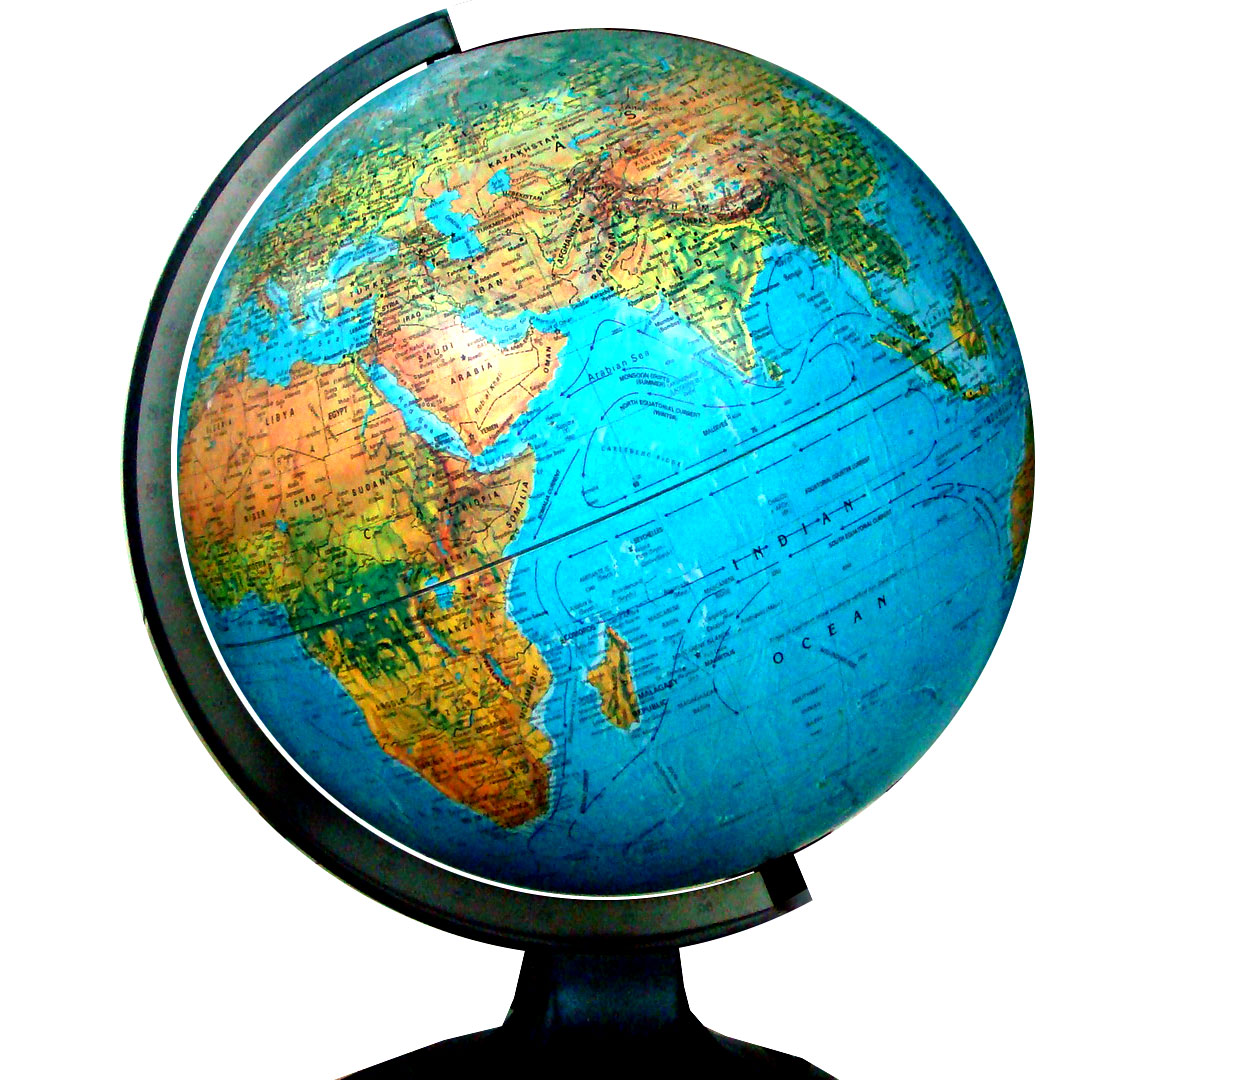 Globe, World globe, Political world globe, Big Globe of world